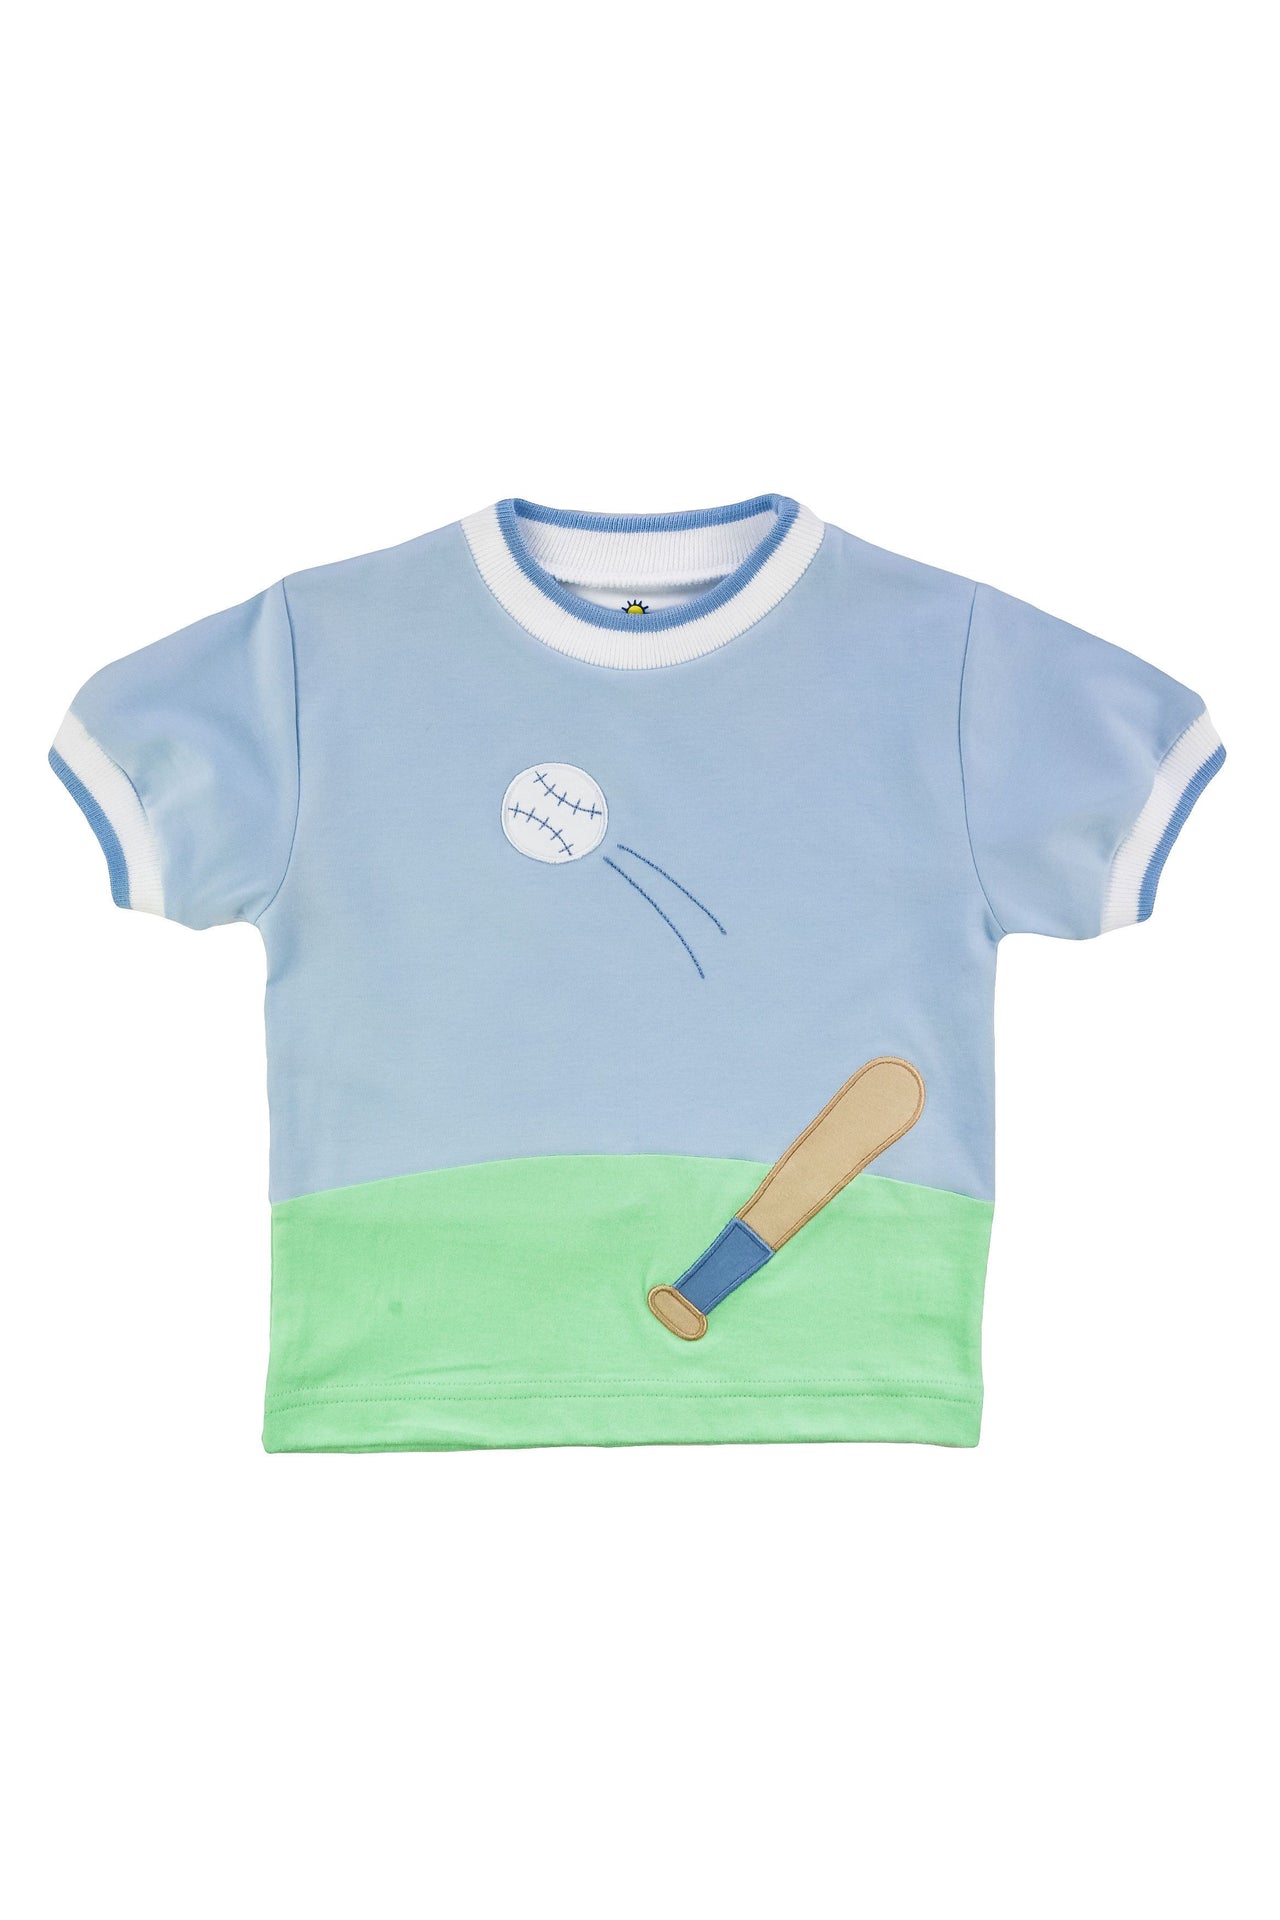 Florence Eiseman Knit Shirt W/Baseball Scene C5234 5011